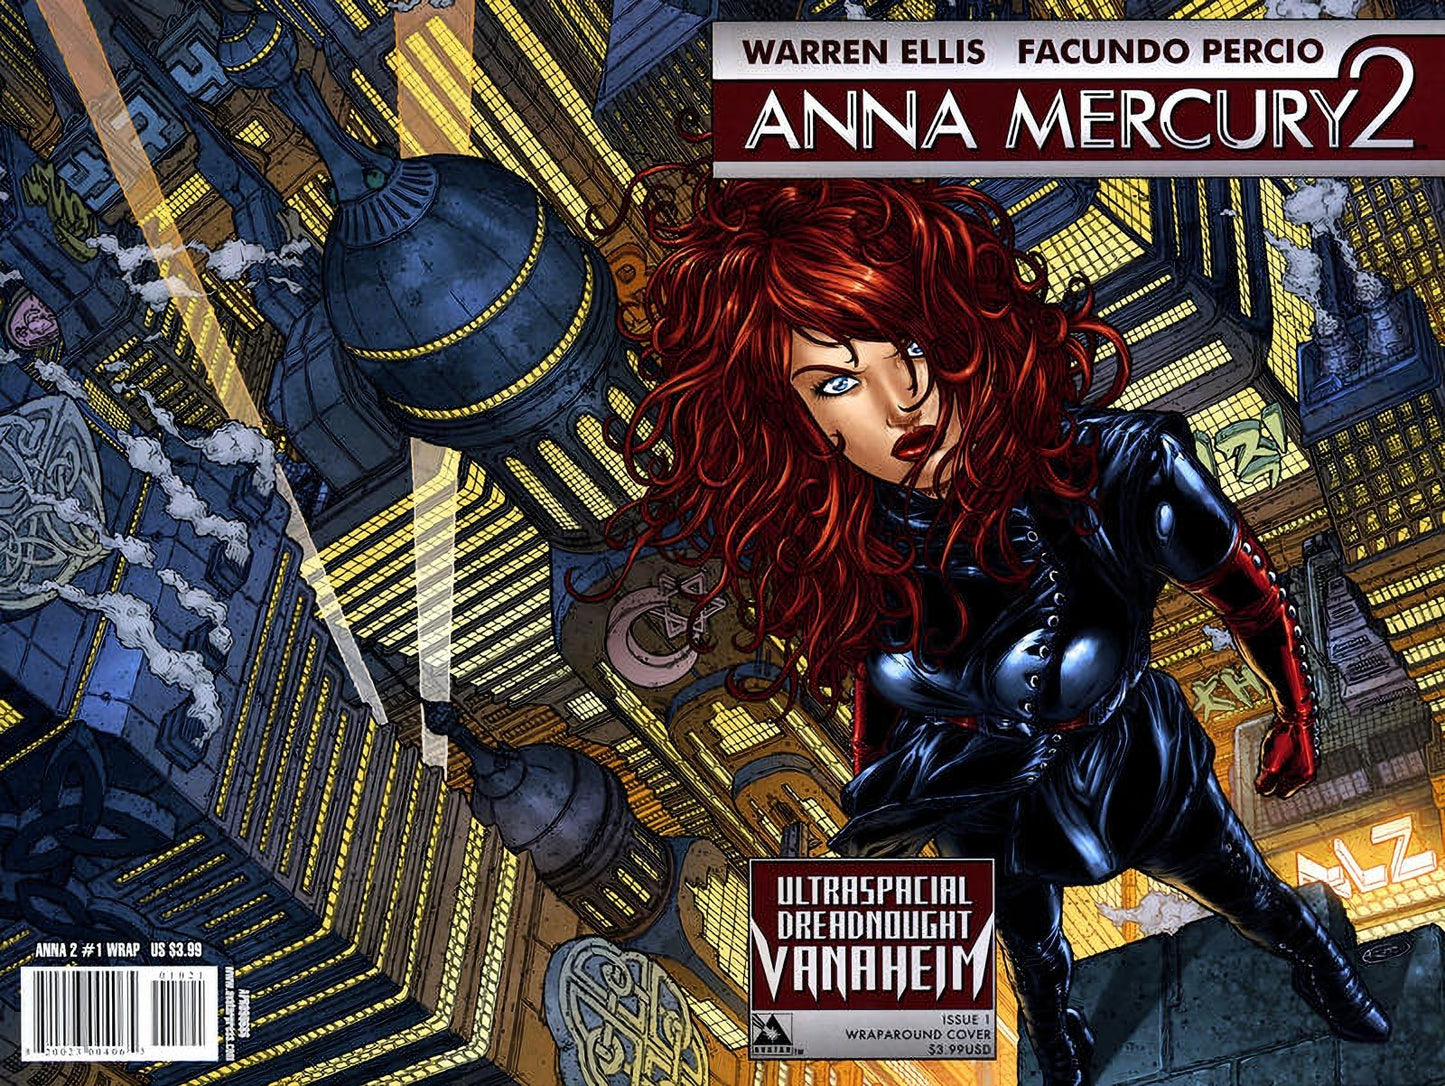 Anna Mercury 2 #1 Wrap Cover (2009) Avatar Press Comics